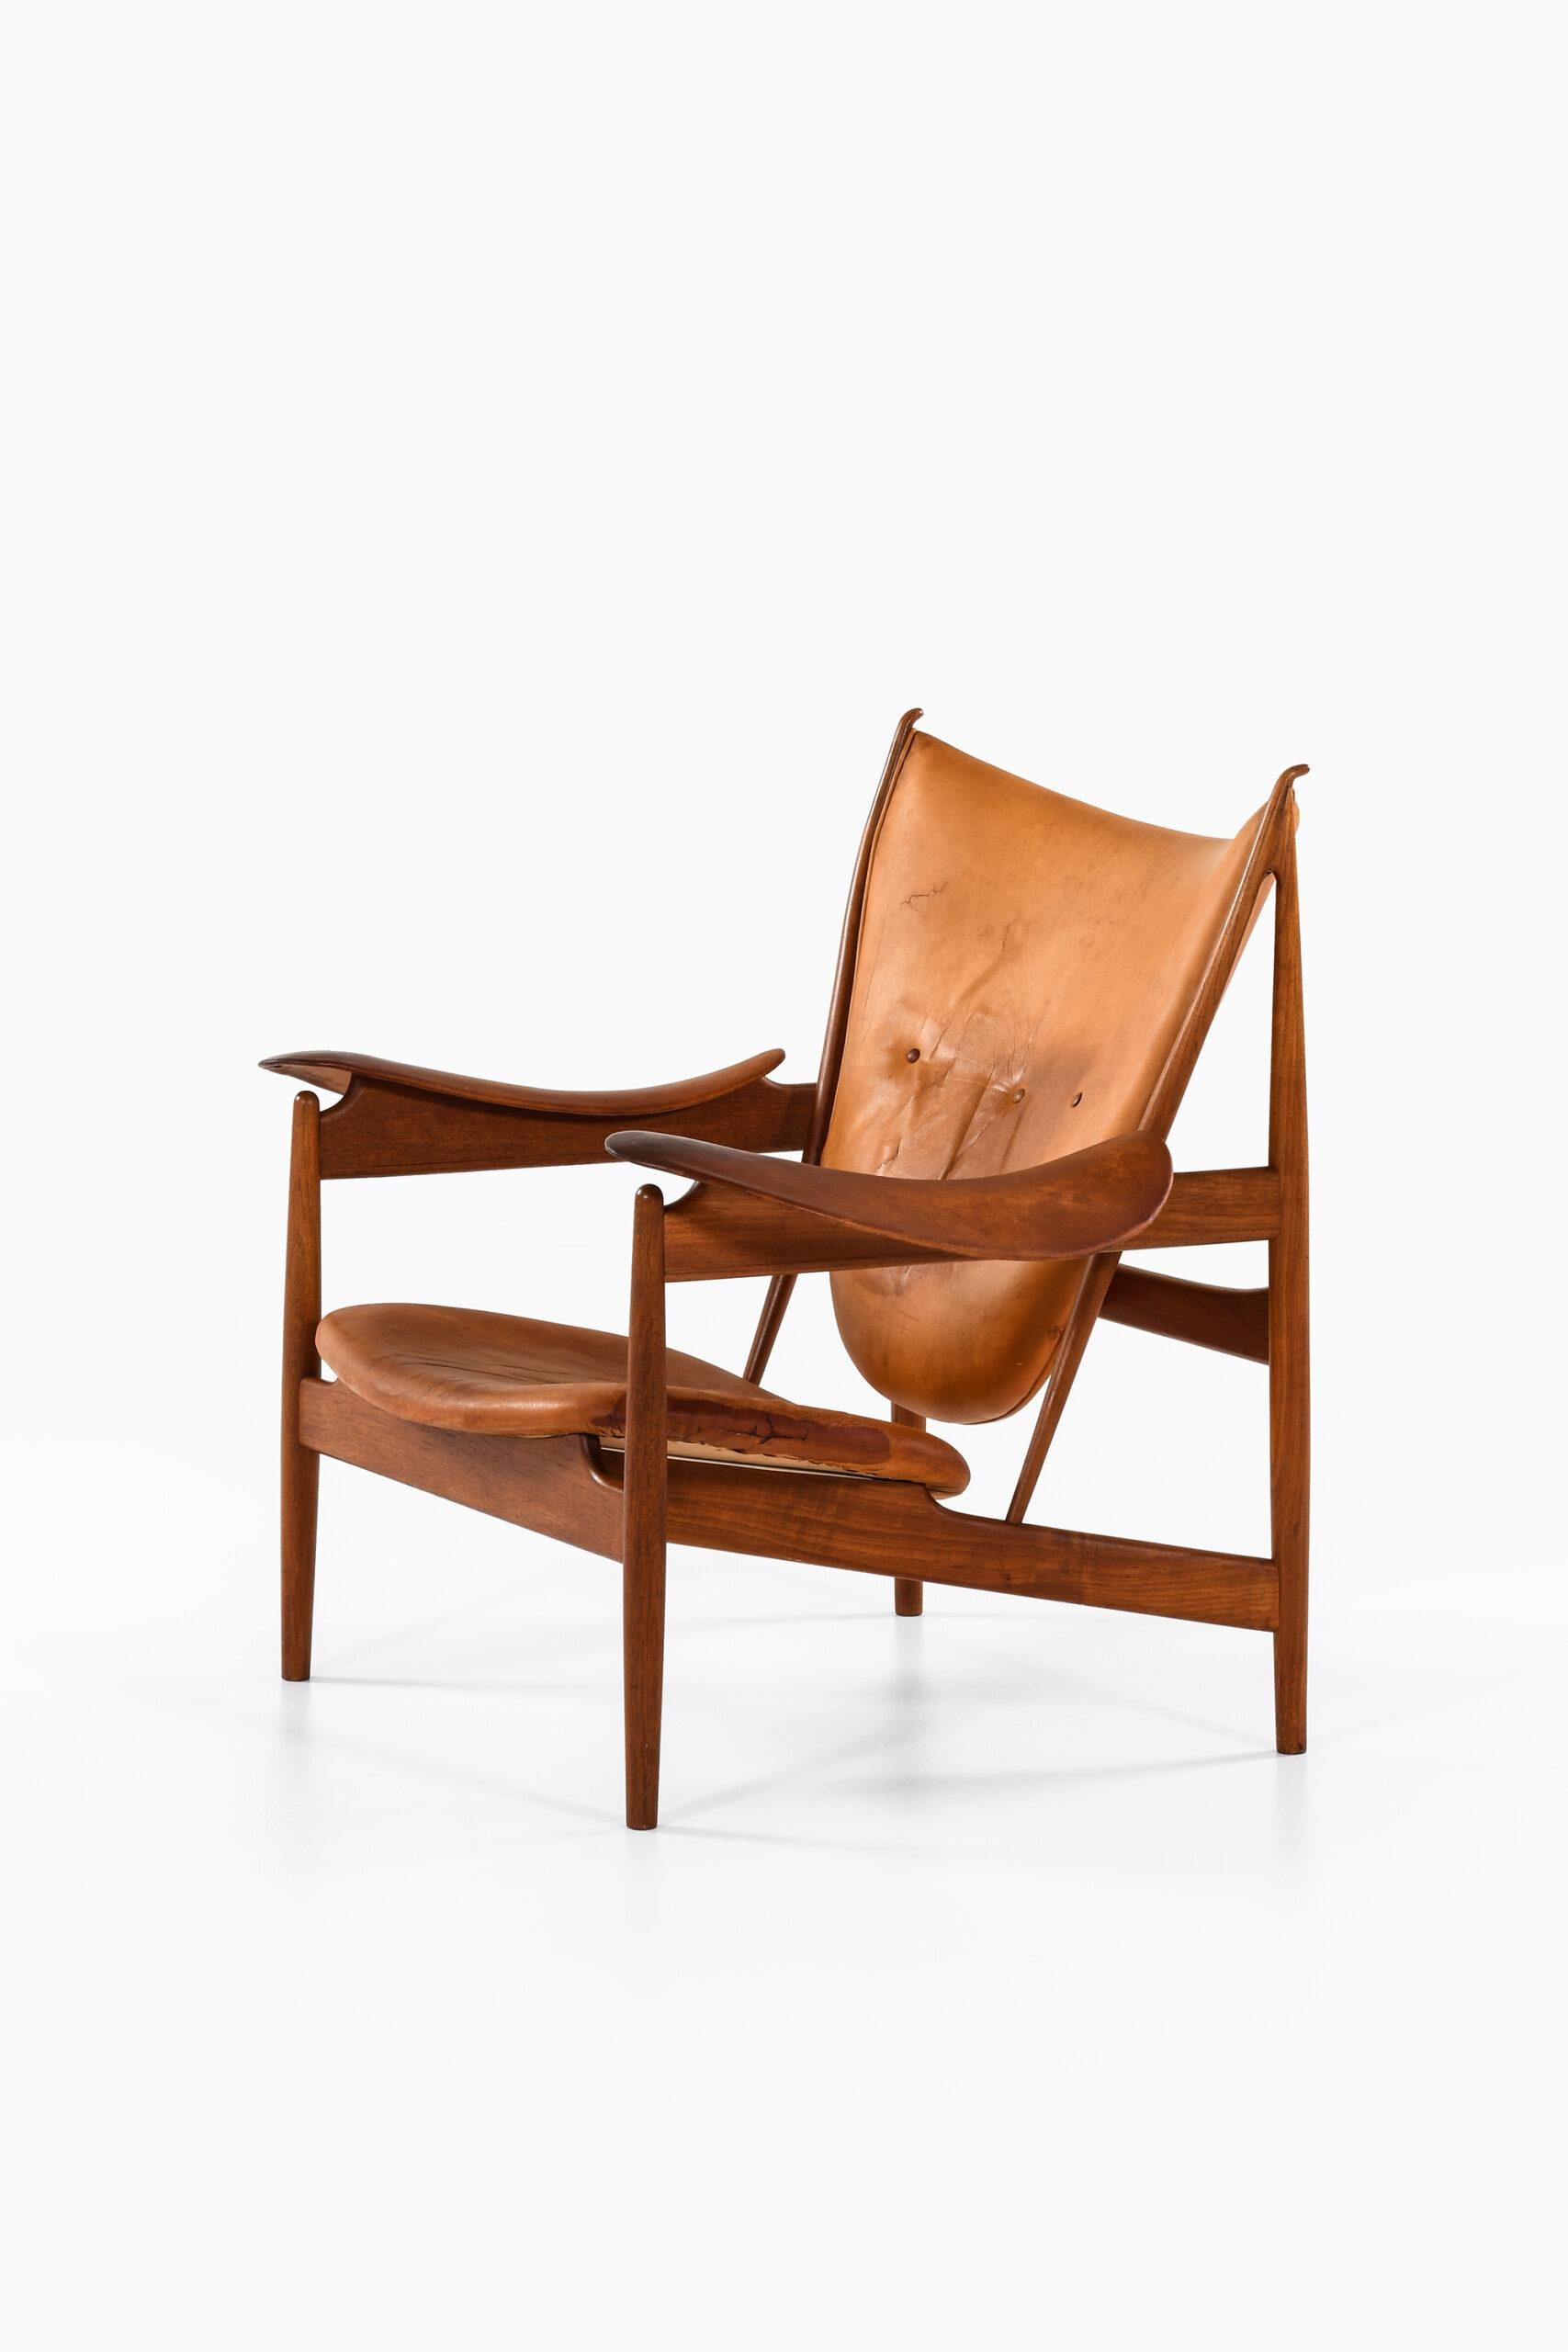 Finn Juhl Chieftain Easy Chair Produced by Cabinetmaker Niels Vodder 9